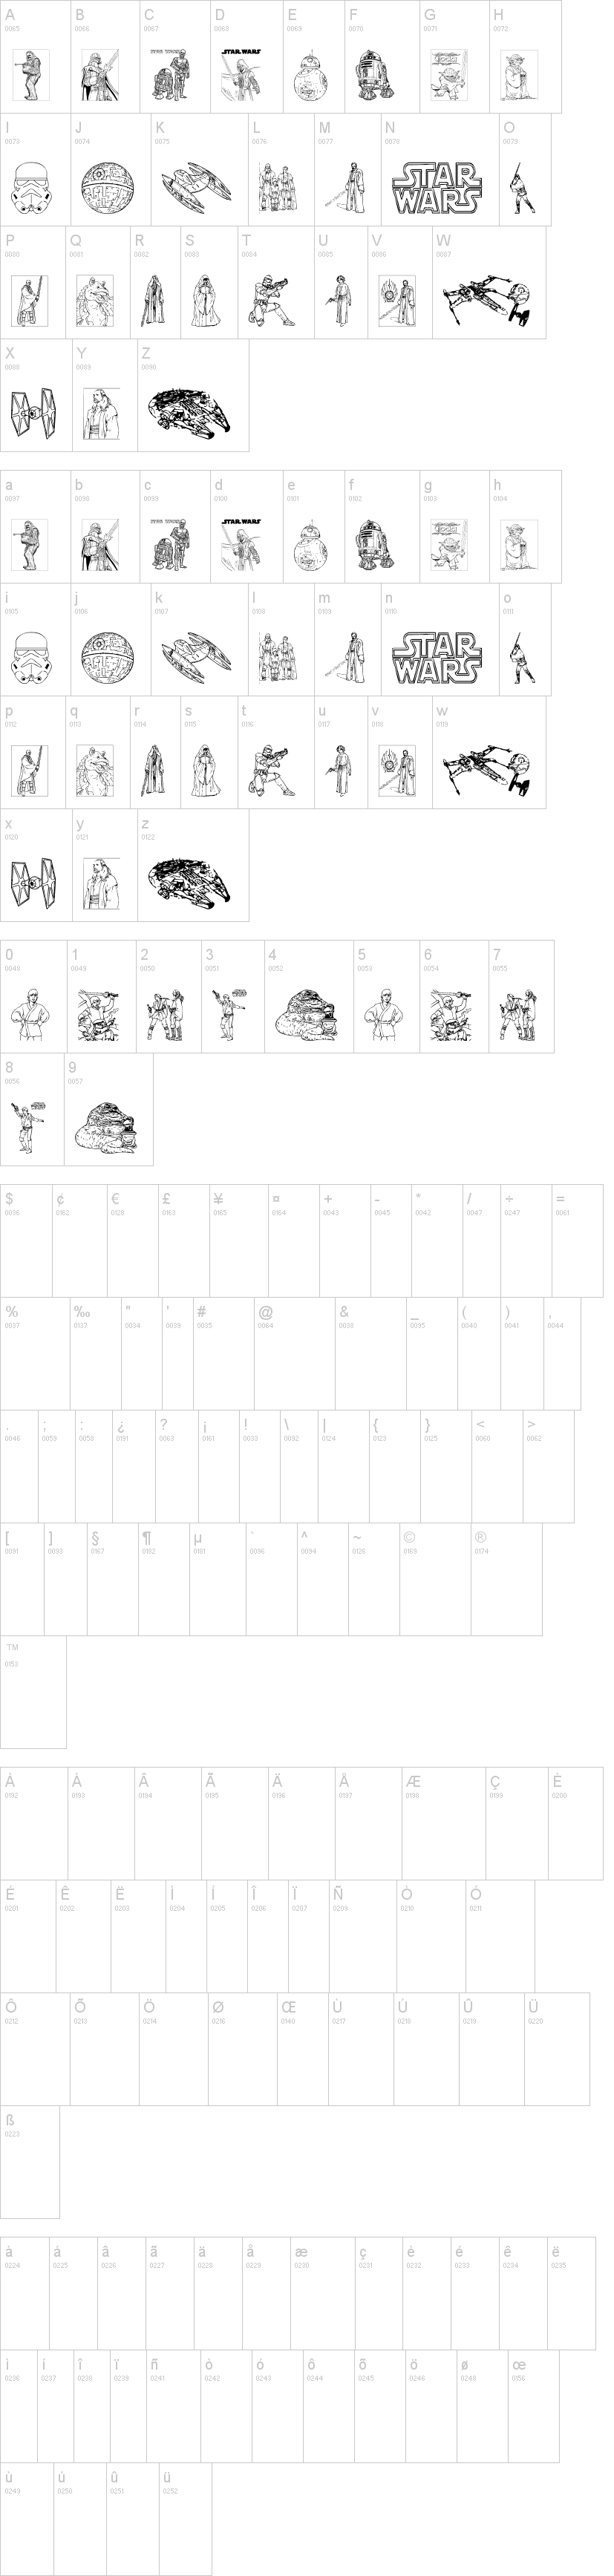 Lucas characters字符映射图